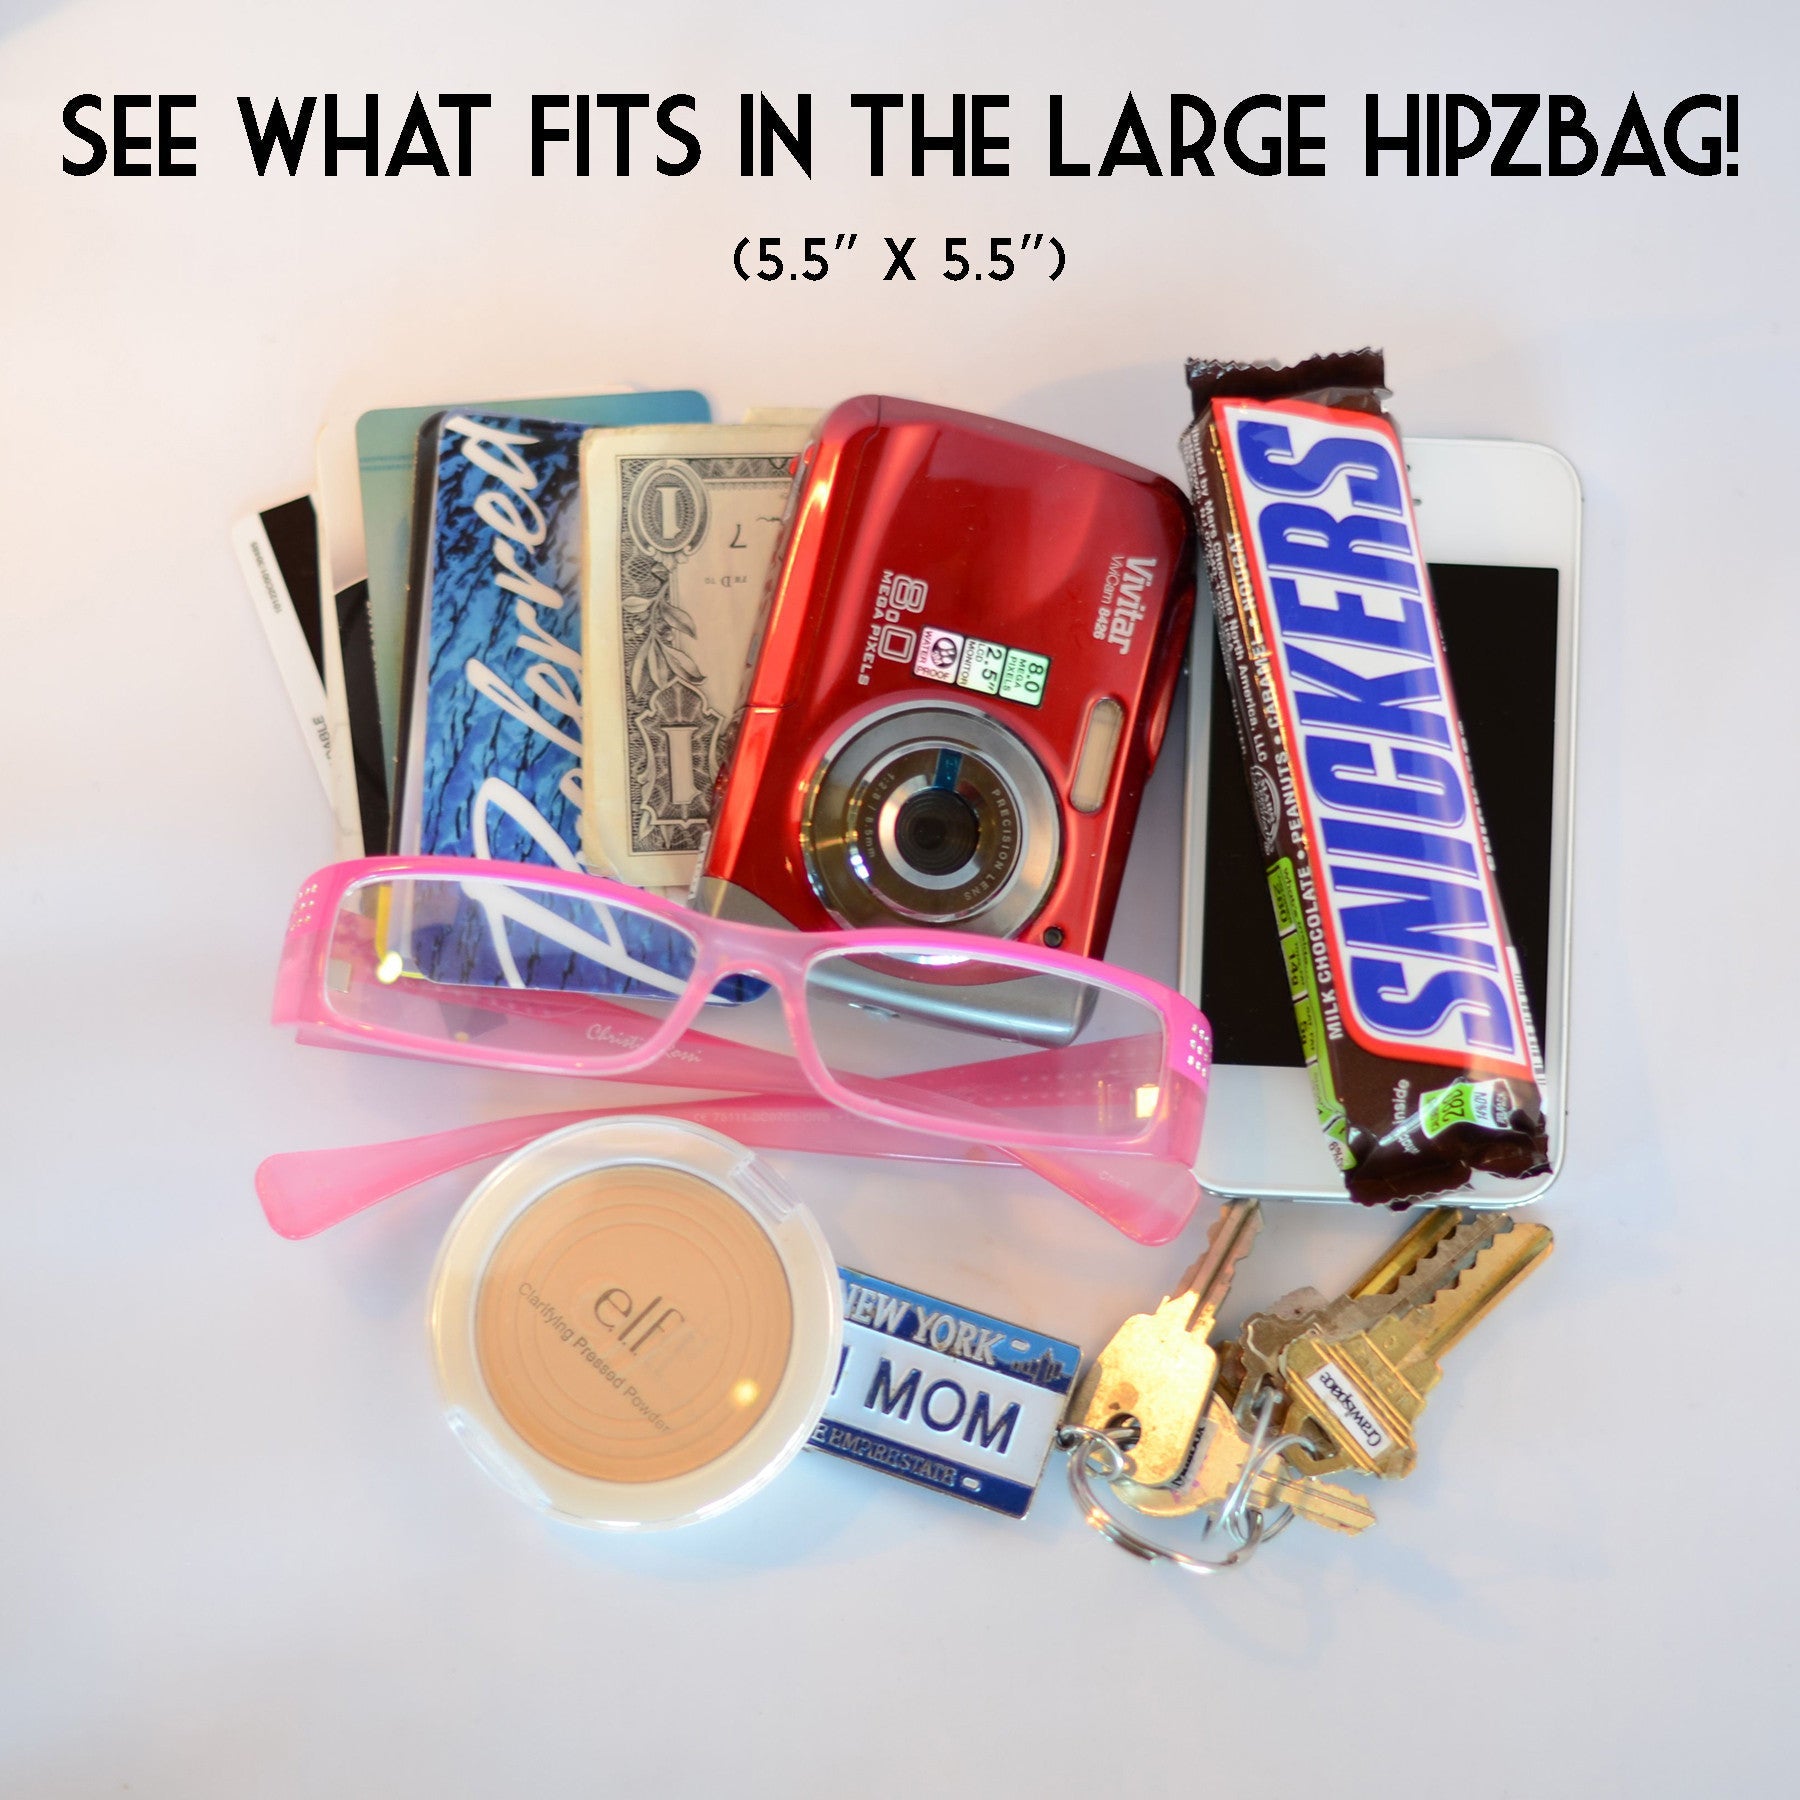 Hipzbag, Special Features